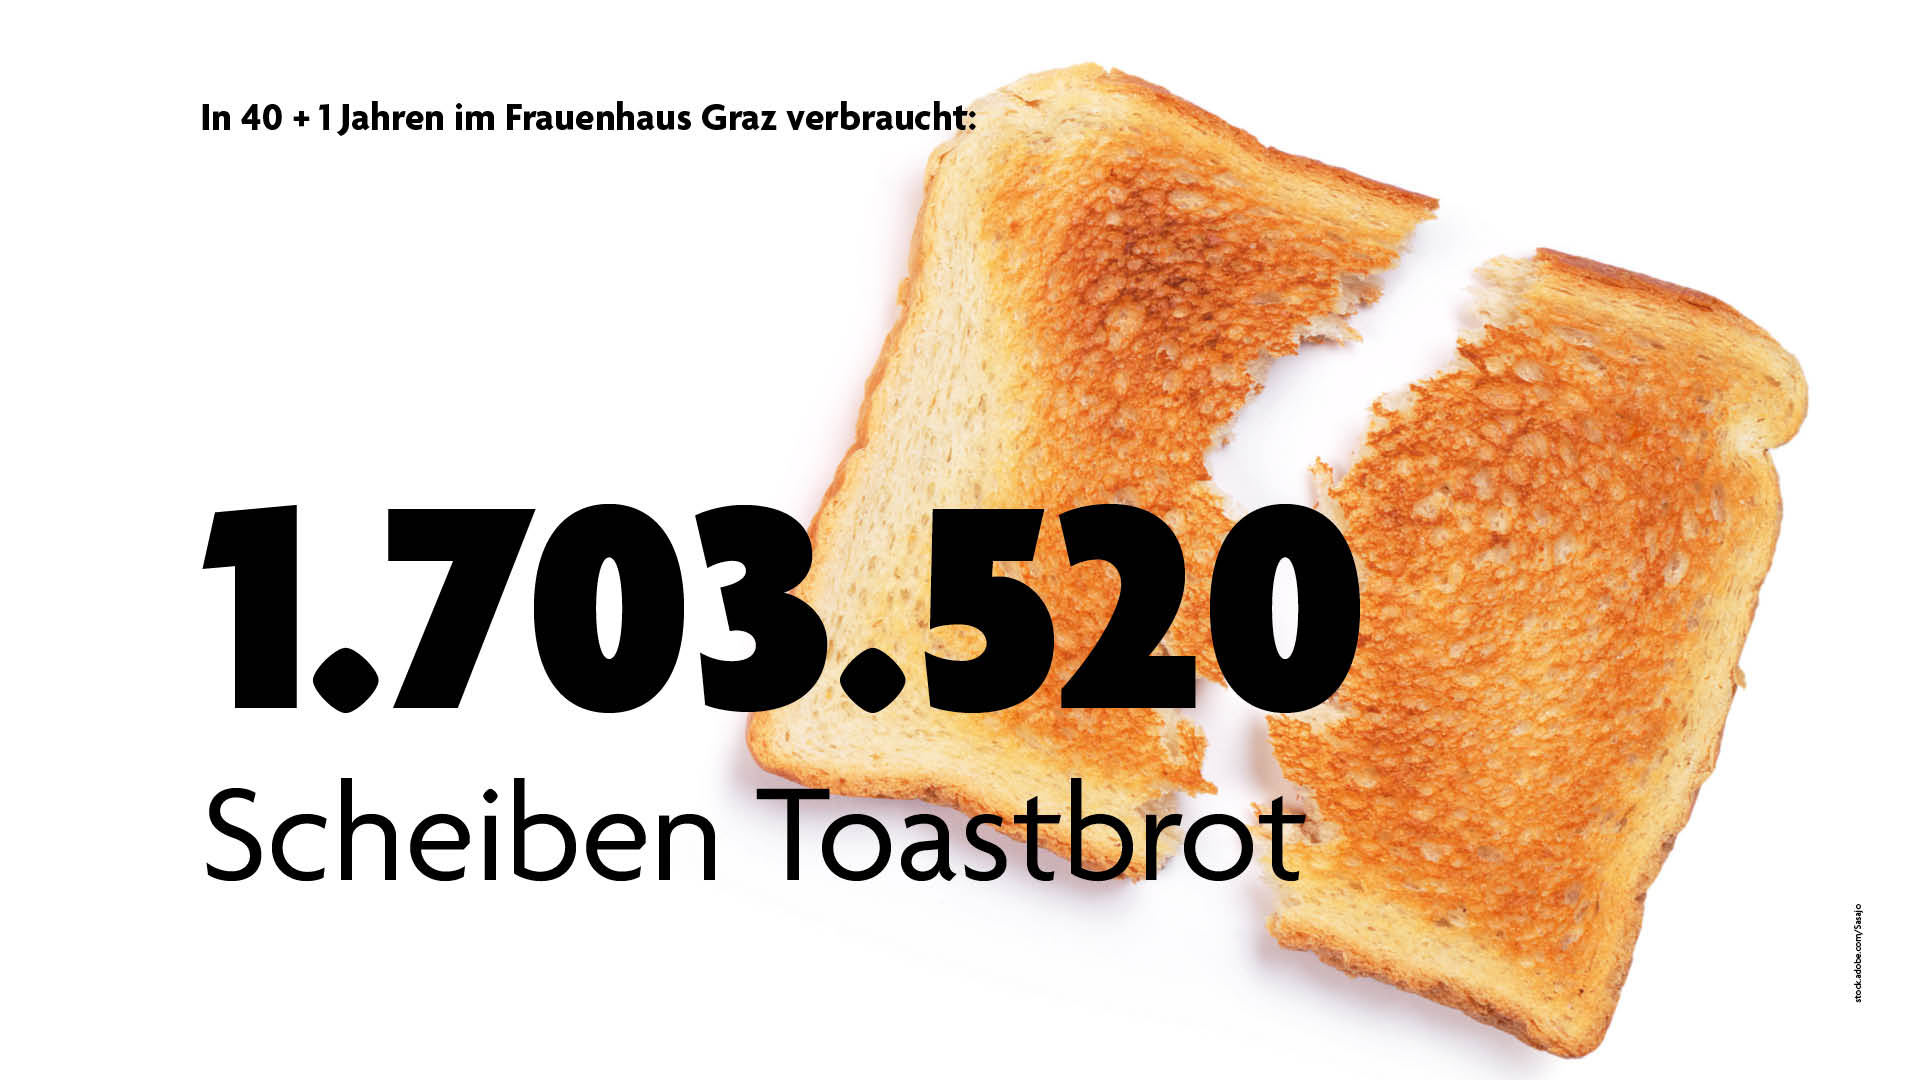 LOOK_Frauenhaeuser_web_Toastbrot_c_Adobe Stock